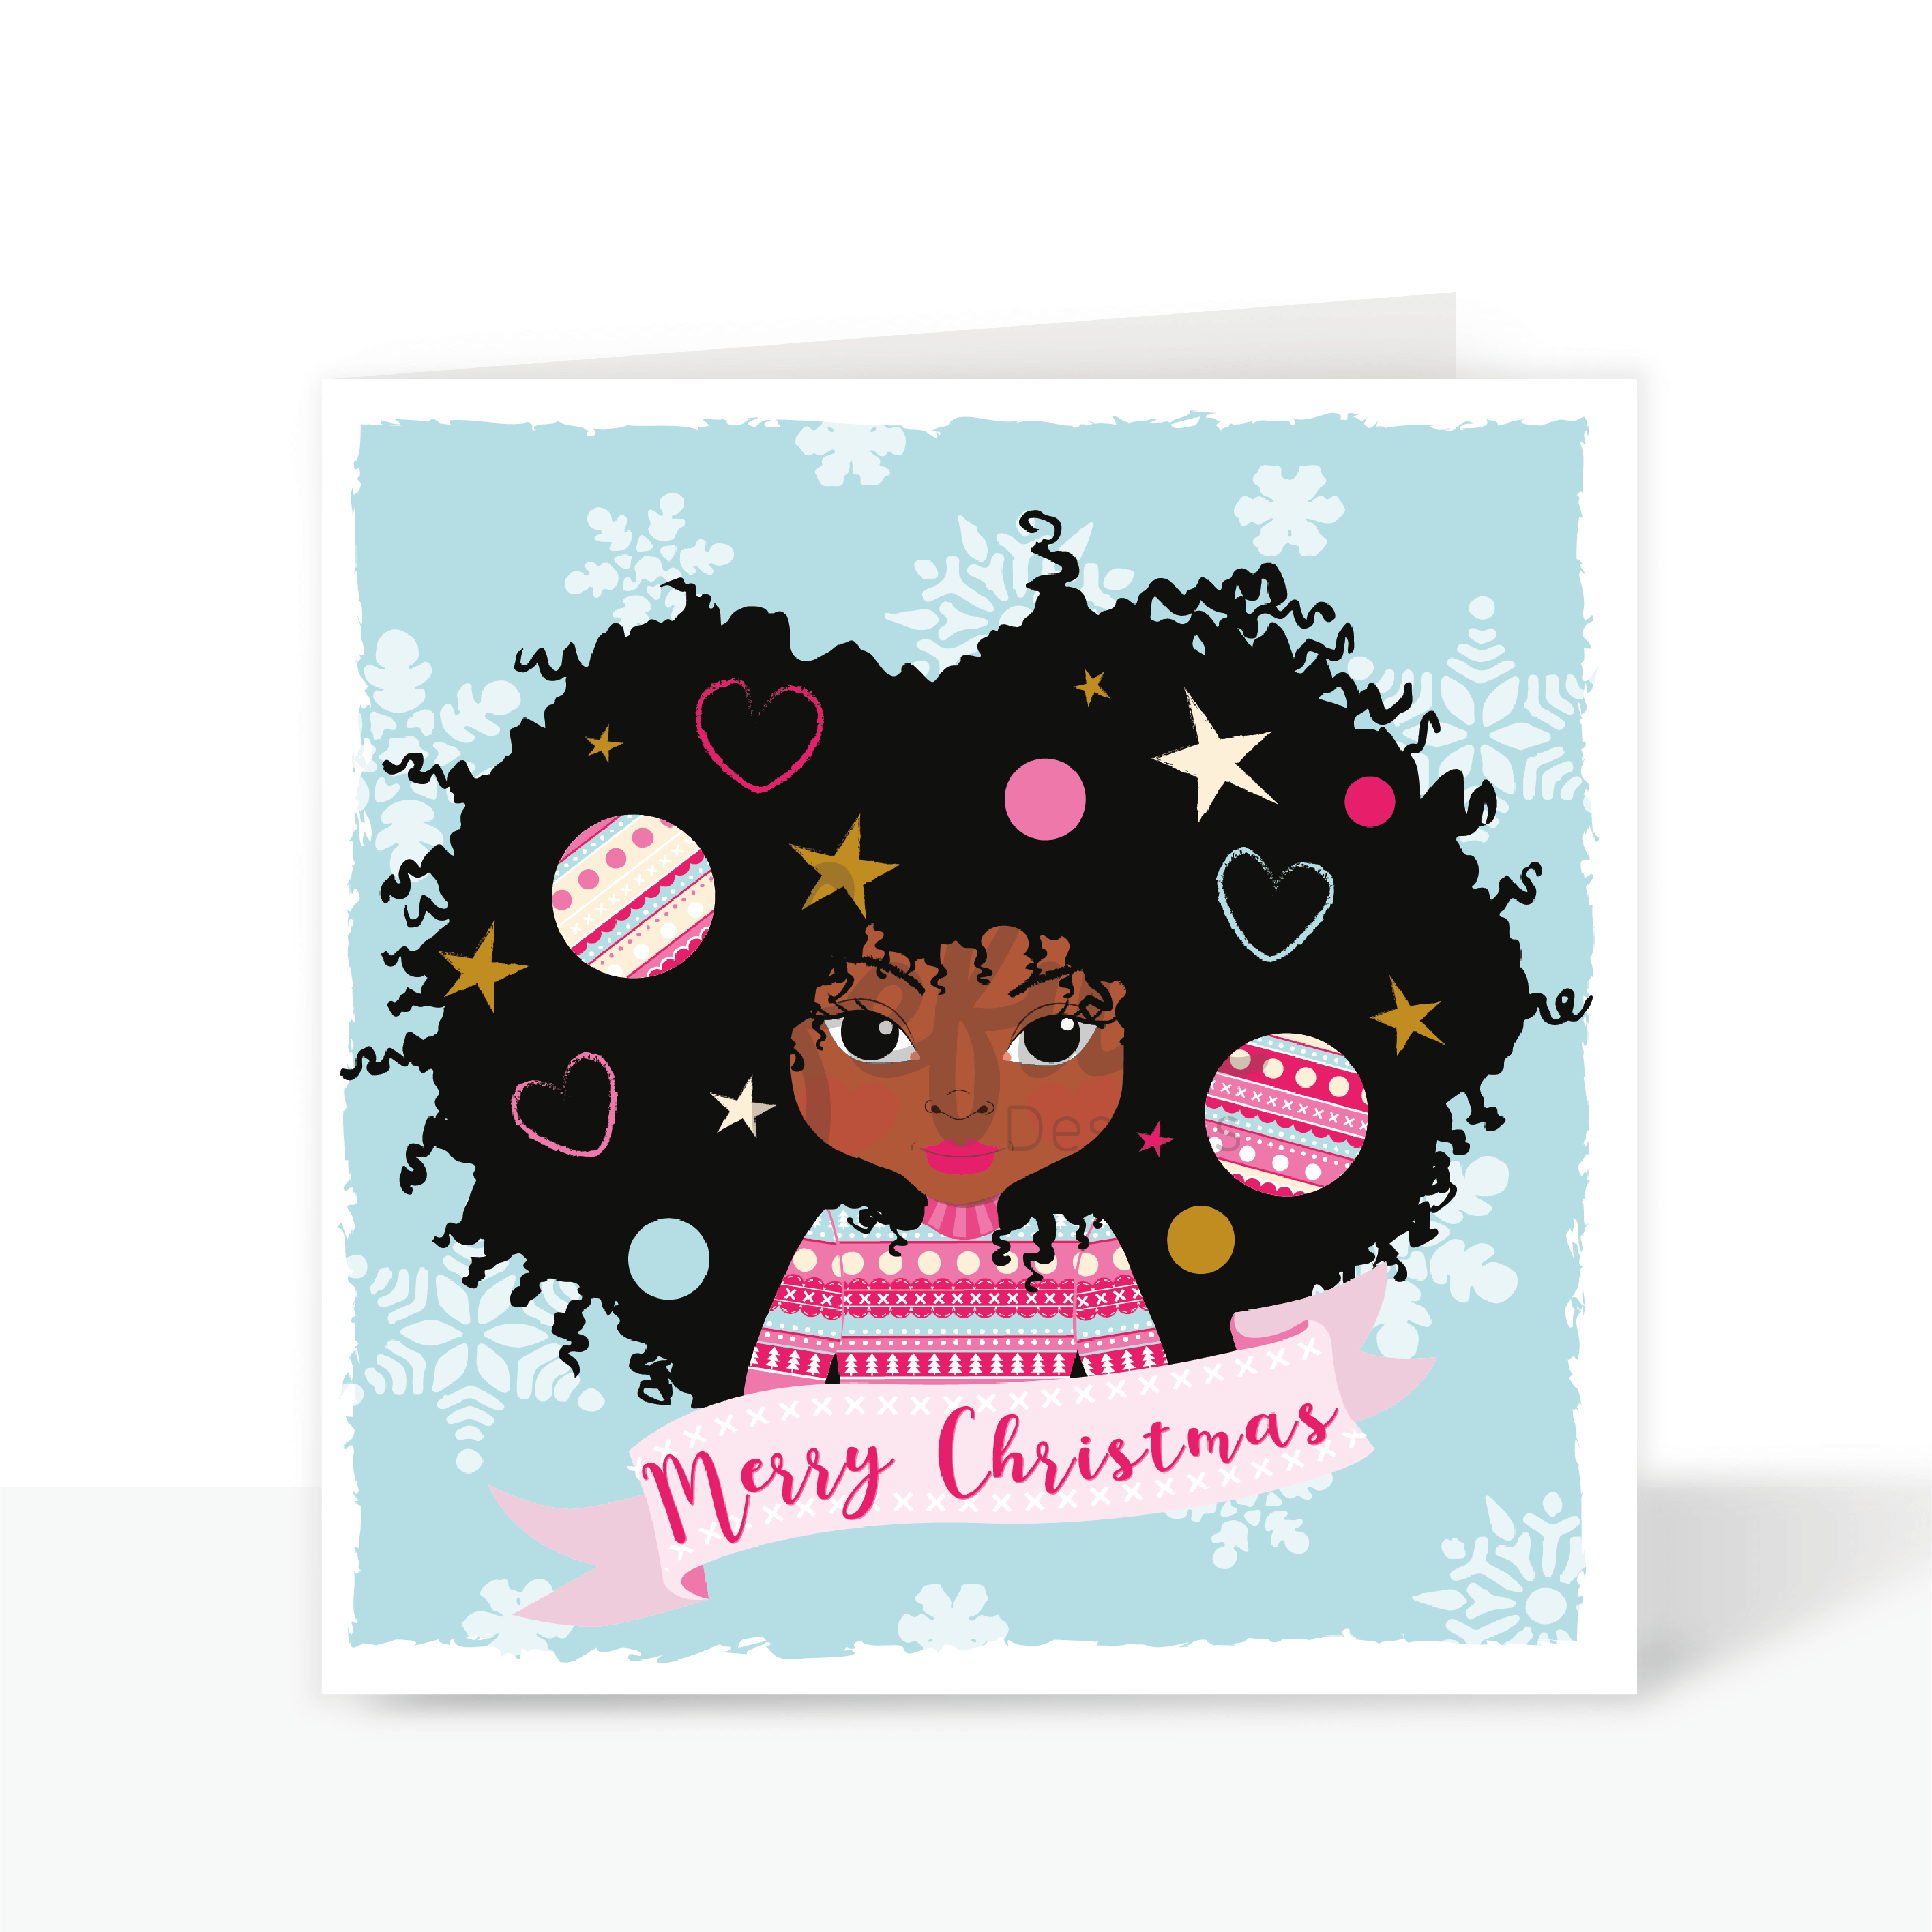 Decorated Afro Girl V2 - Black Christmas Card | Fefus designs